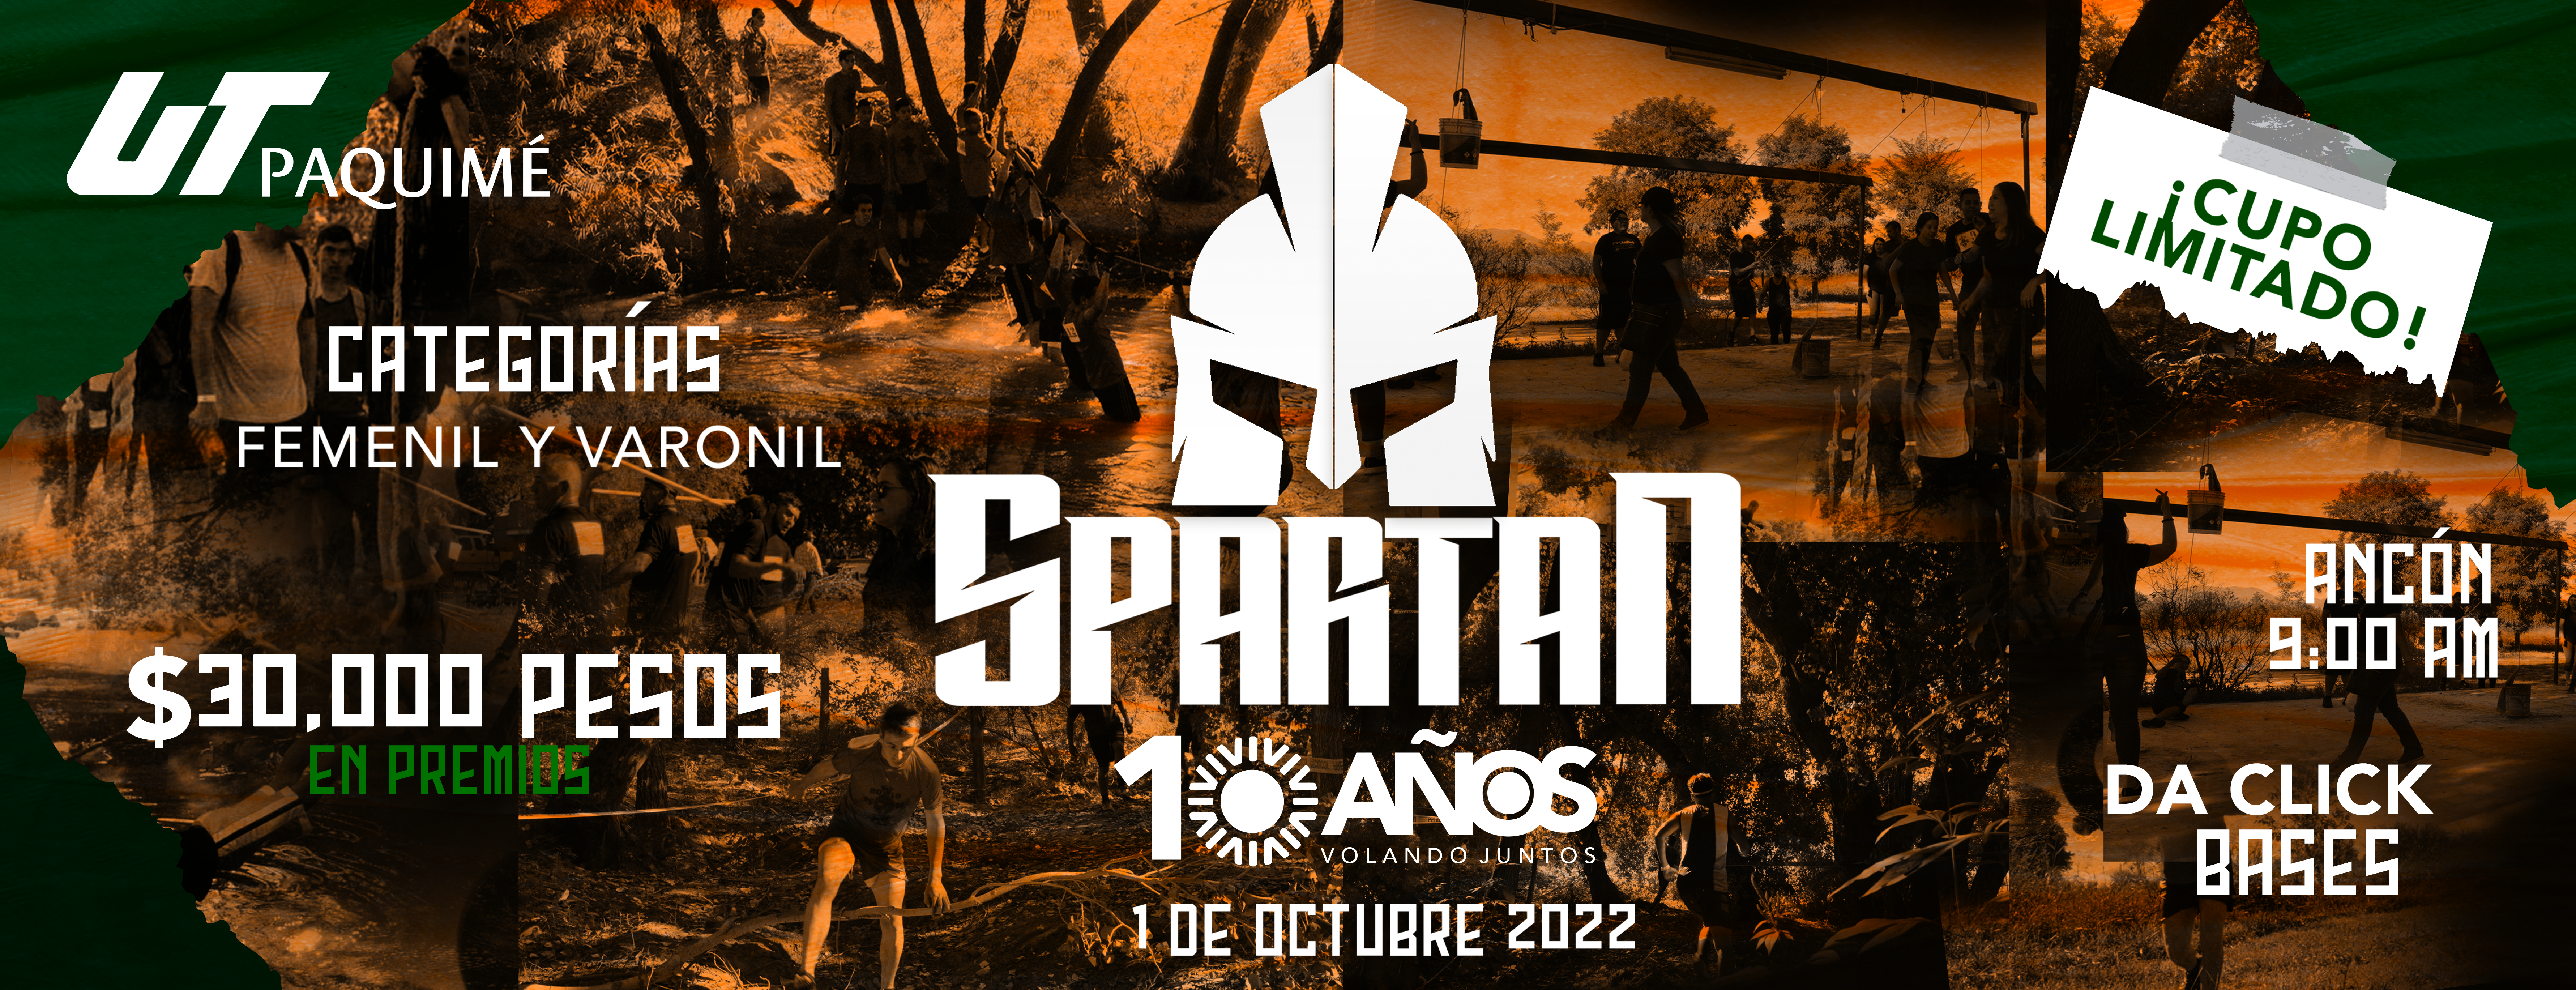 Spartan 2022